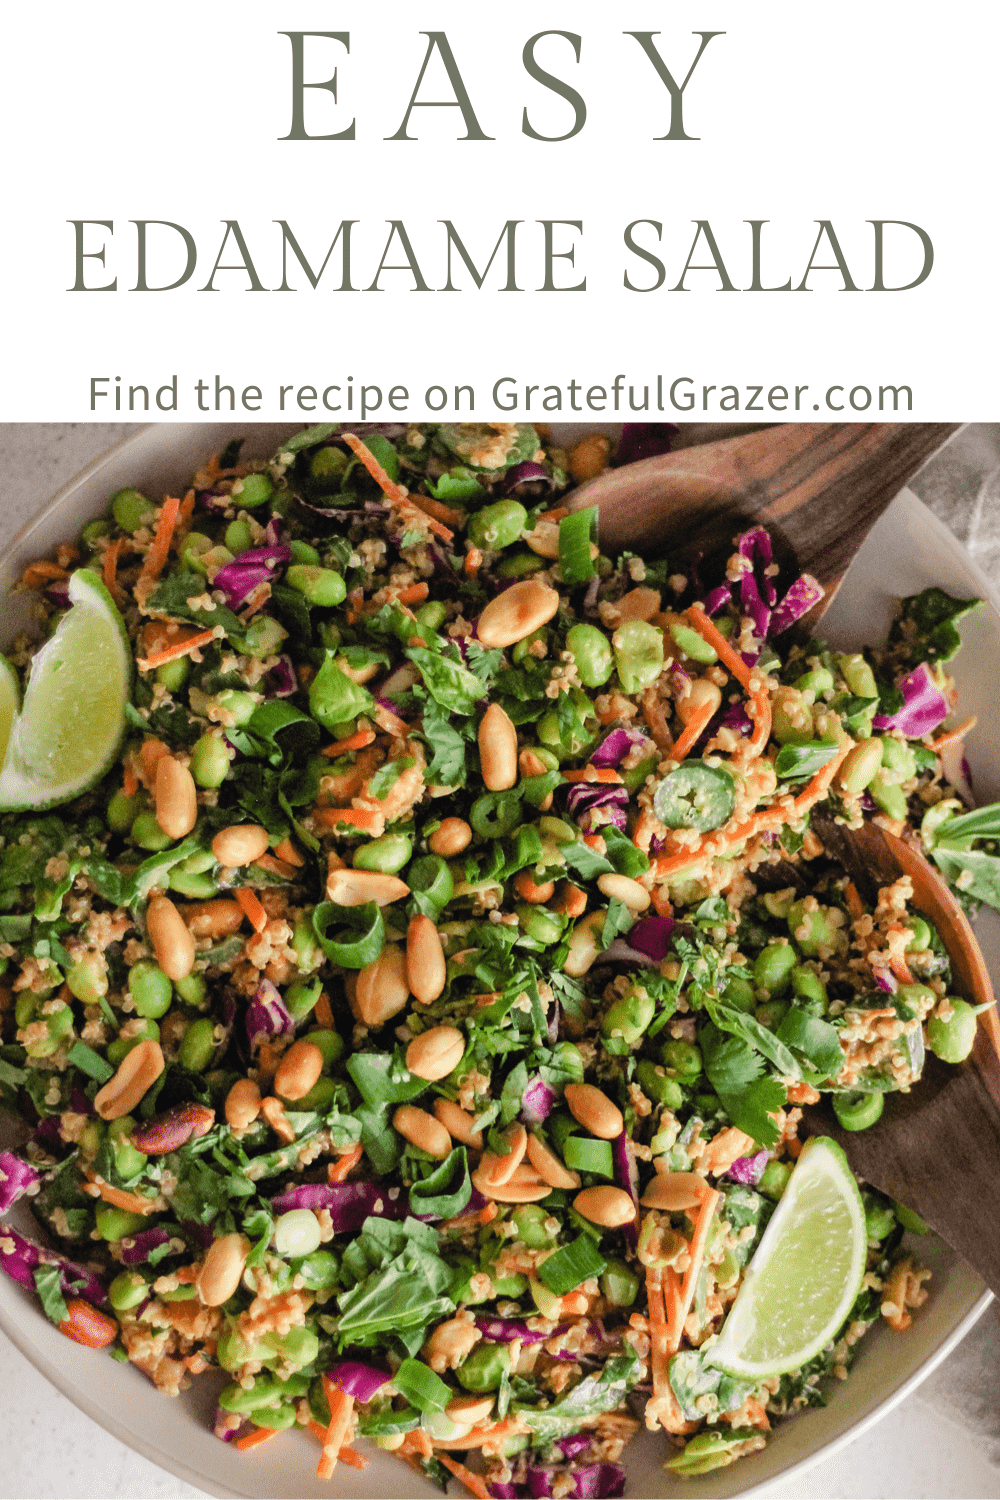 Edamame salad on a cream ceramic dish with text that reads, "Easy Edamame Salad; Find the full recipe on GratefulGrazer.com."